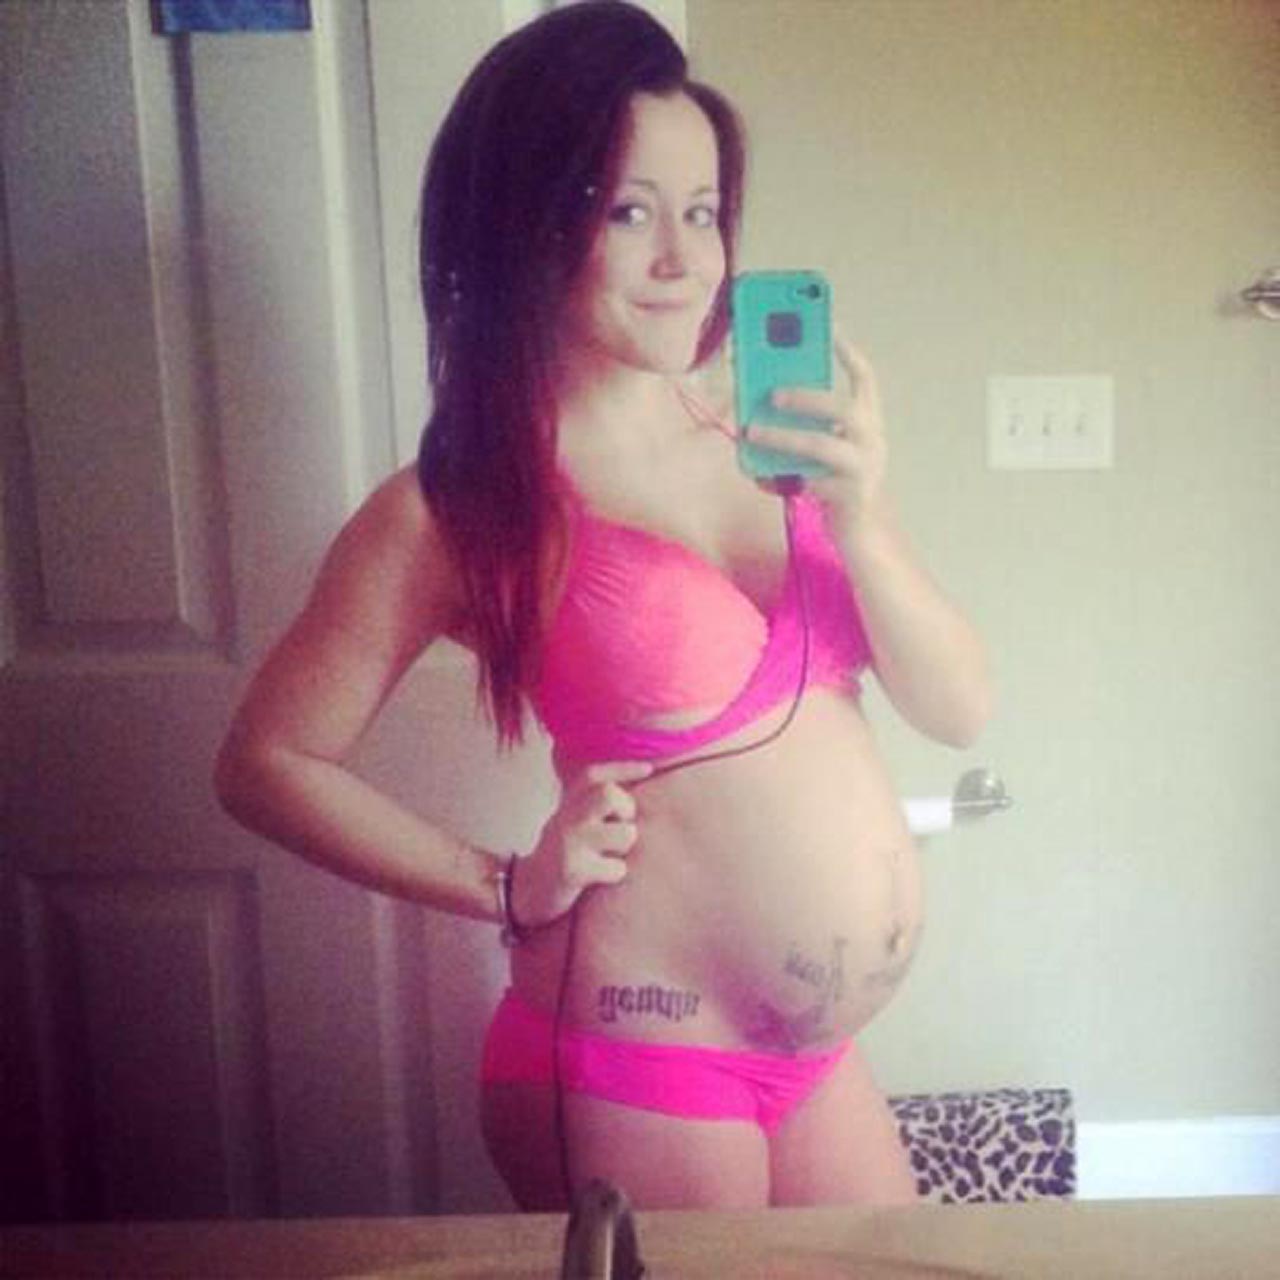 Teen Mom Jenelle Evans Nude & Pregnant Private Pics U Need Too See! app...